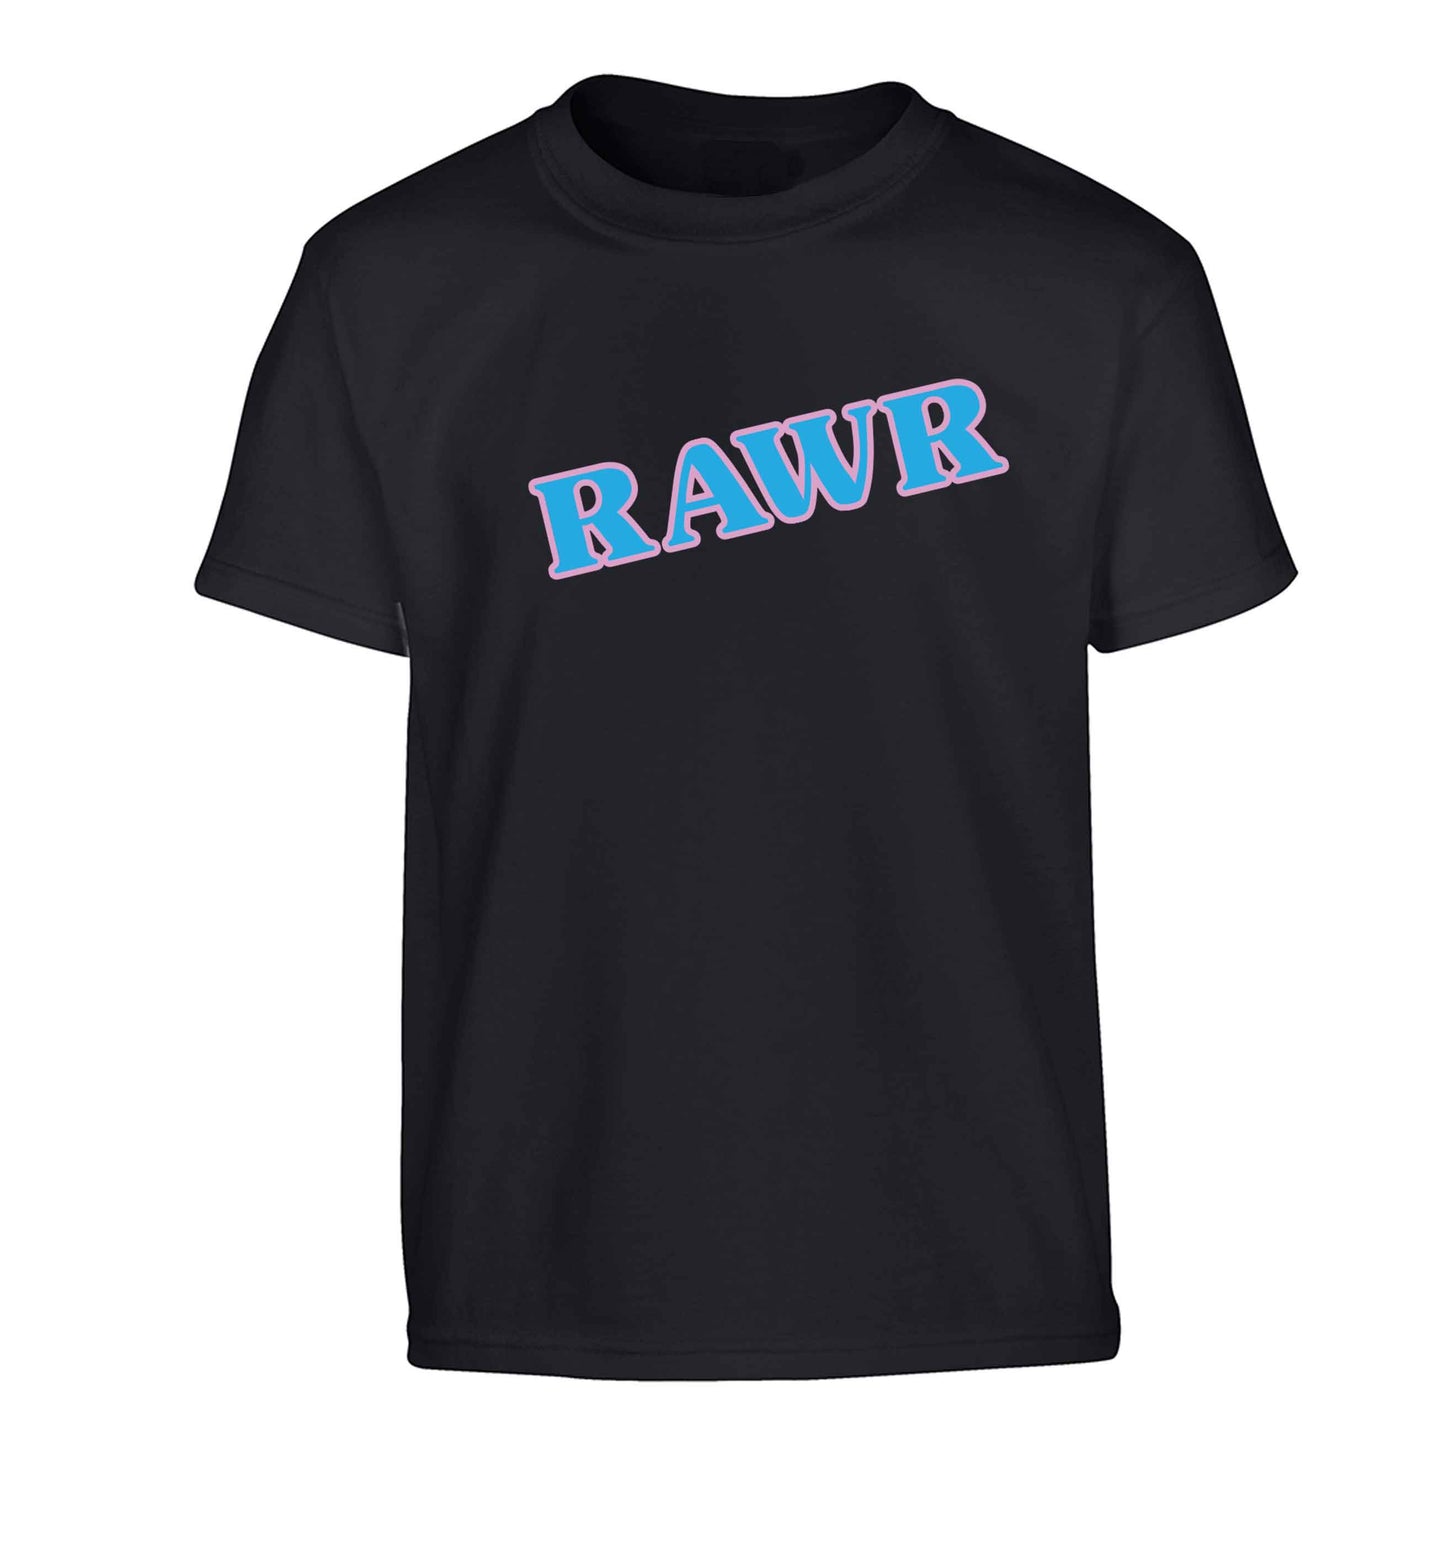 Rawr Children's black Tshirt 12-13 Years